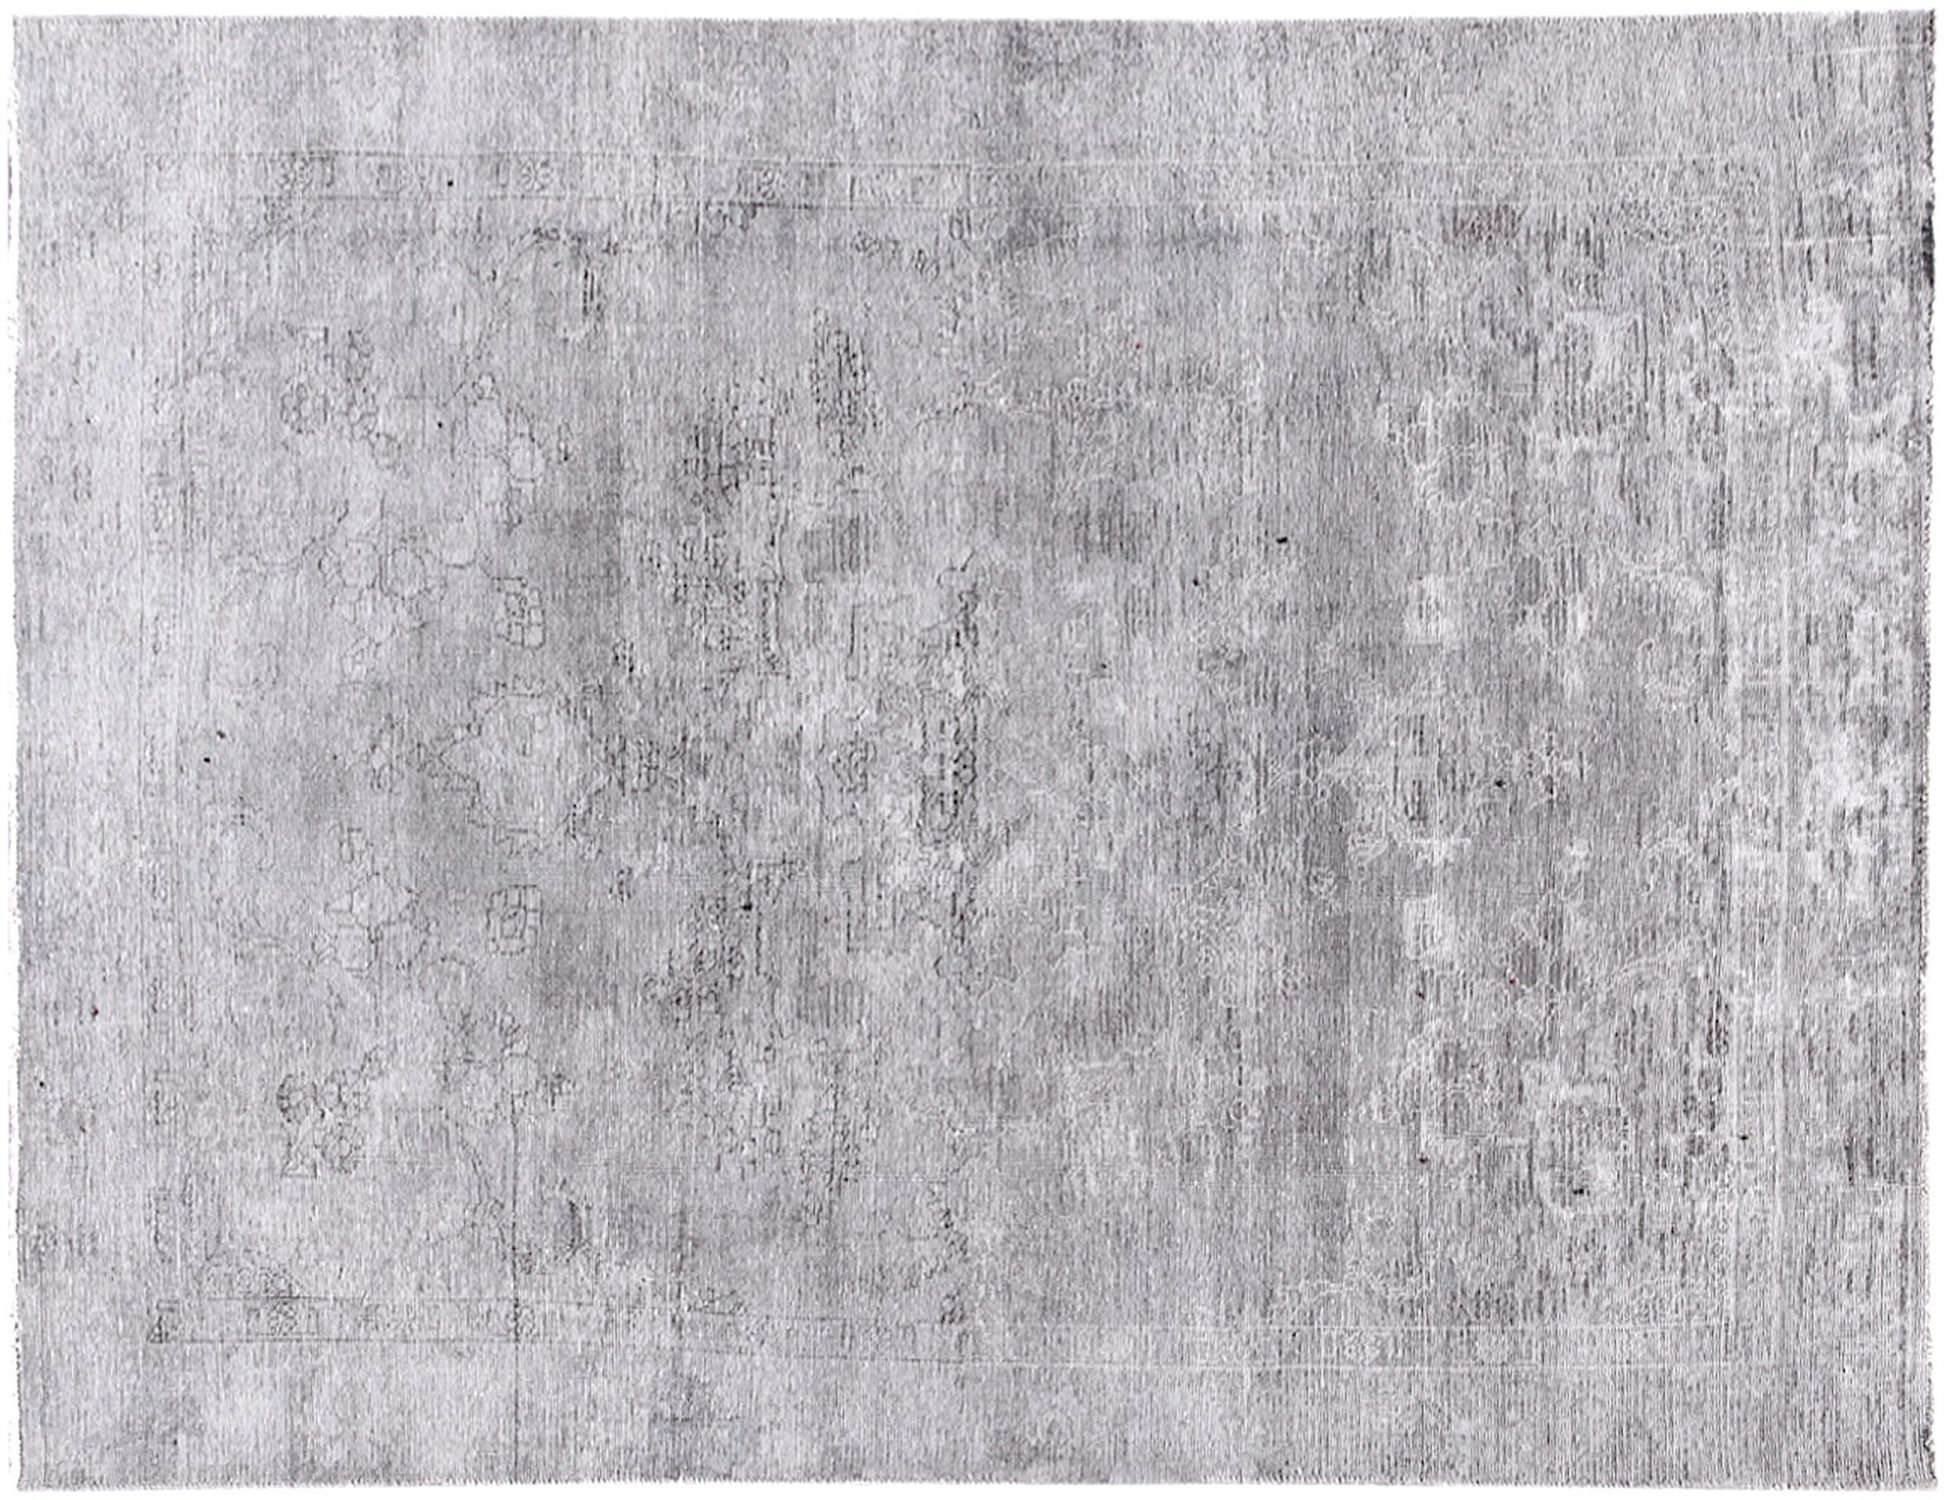 Persian Vintage Carpet  grey <br/>285 x 185 cm